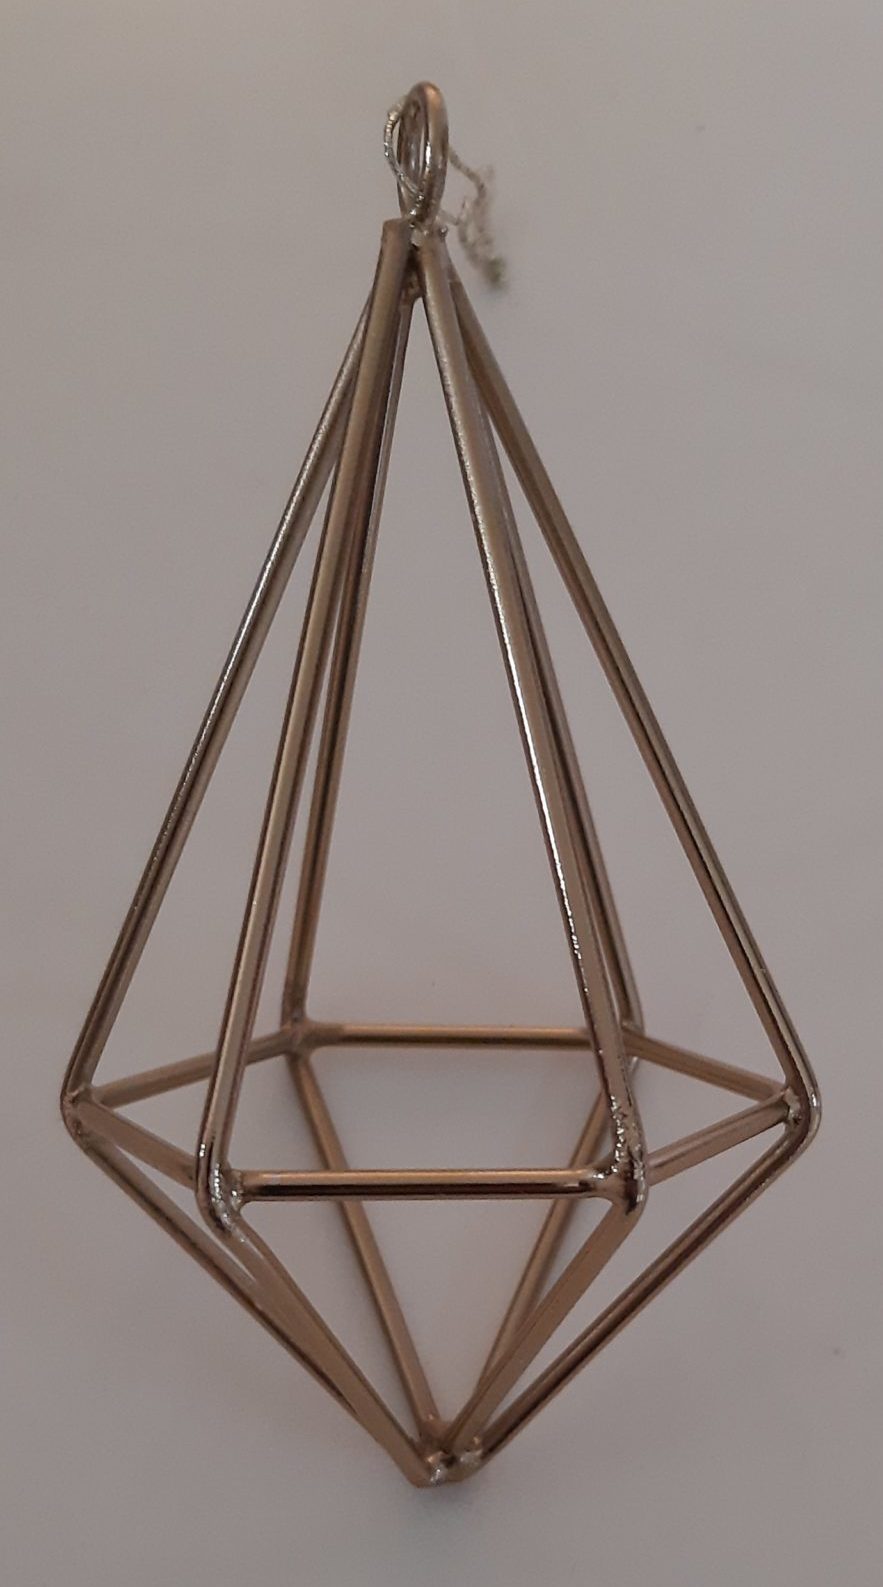 Kimisty (Hexagonal bipyramid)